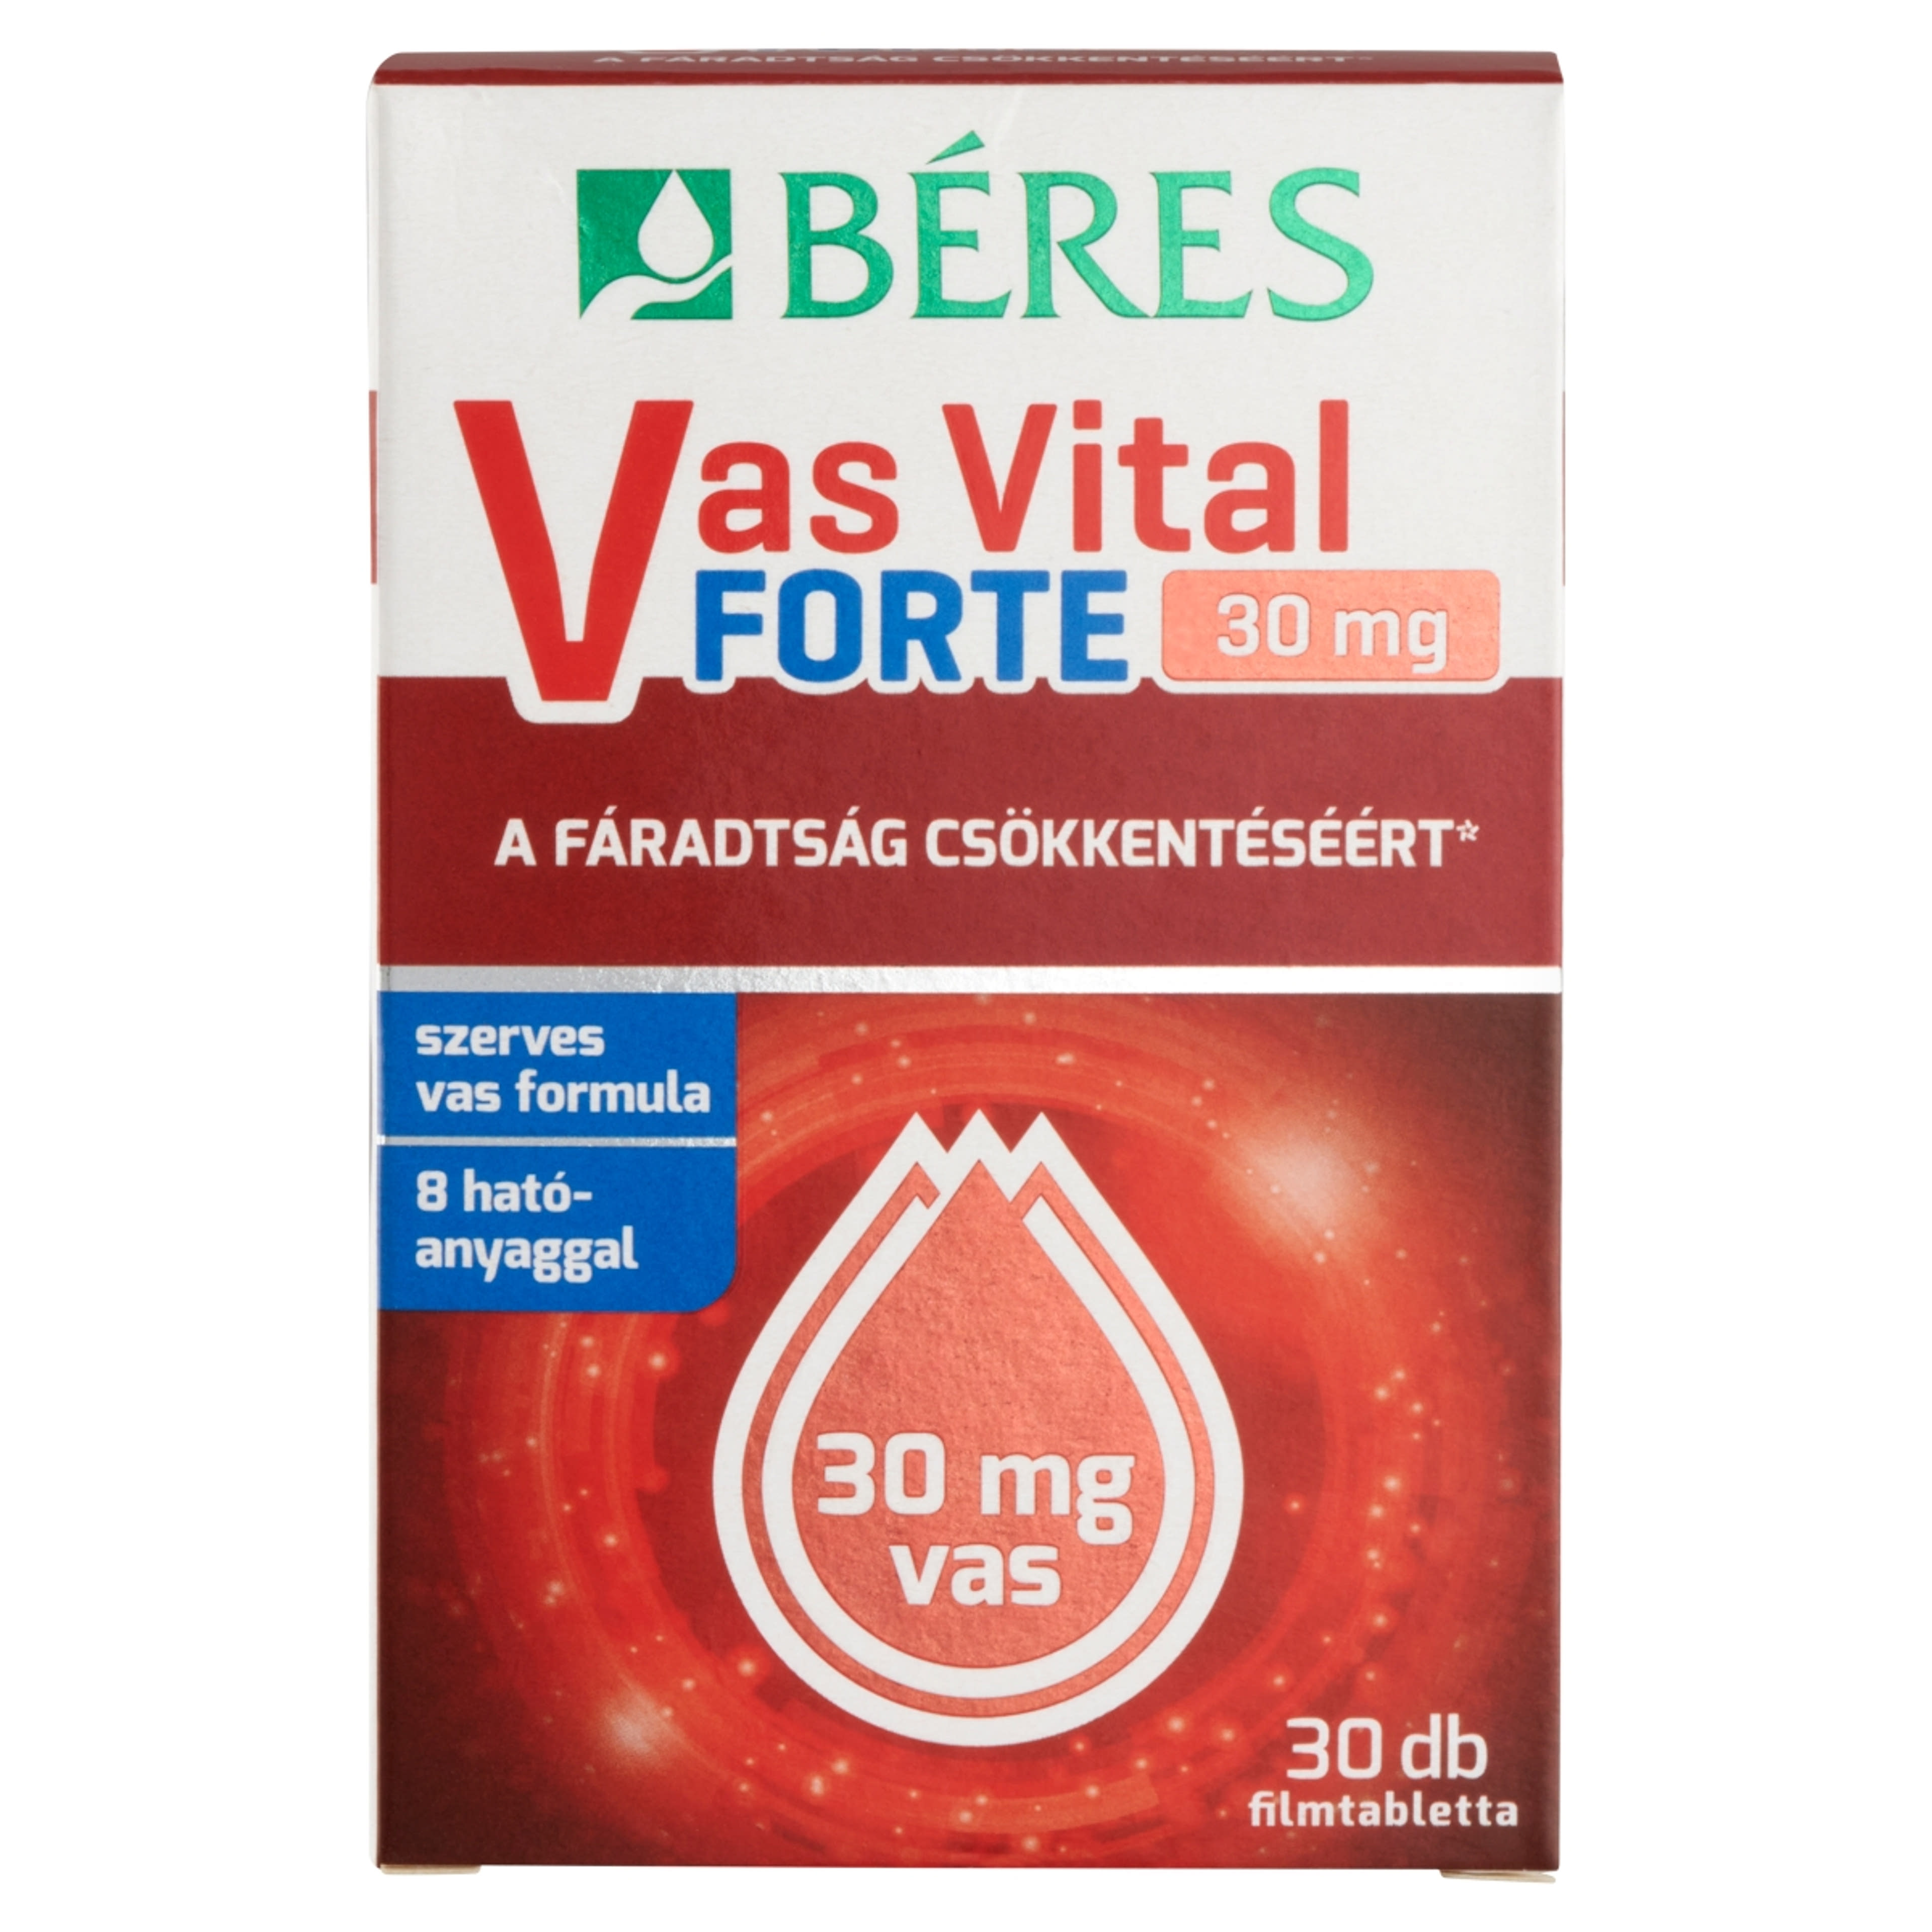 Béres Vas Vital Forte 30 mg étrend-kiegészítő filmtabletta - 30 db